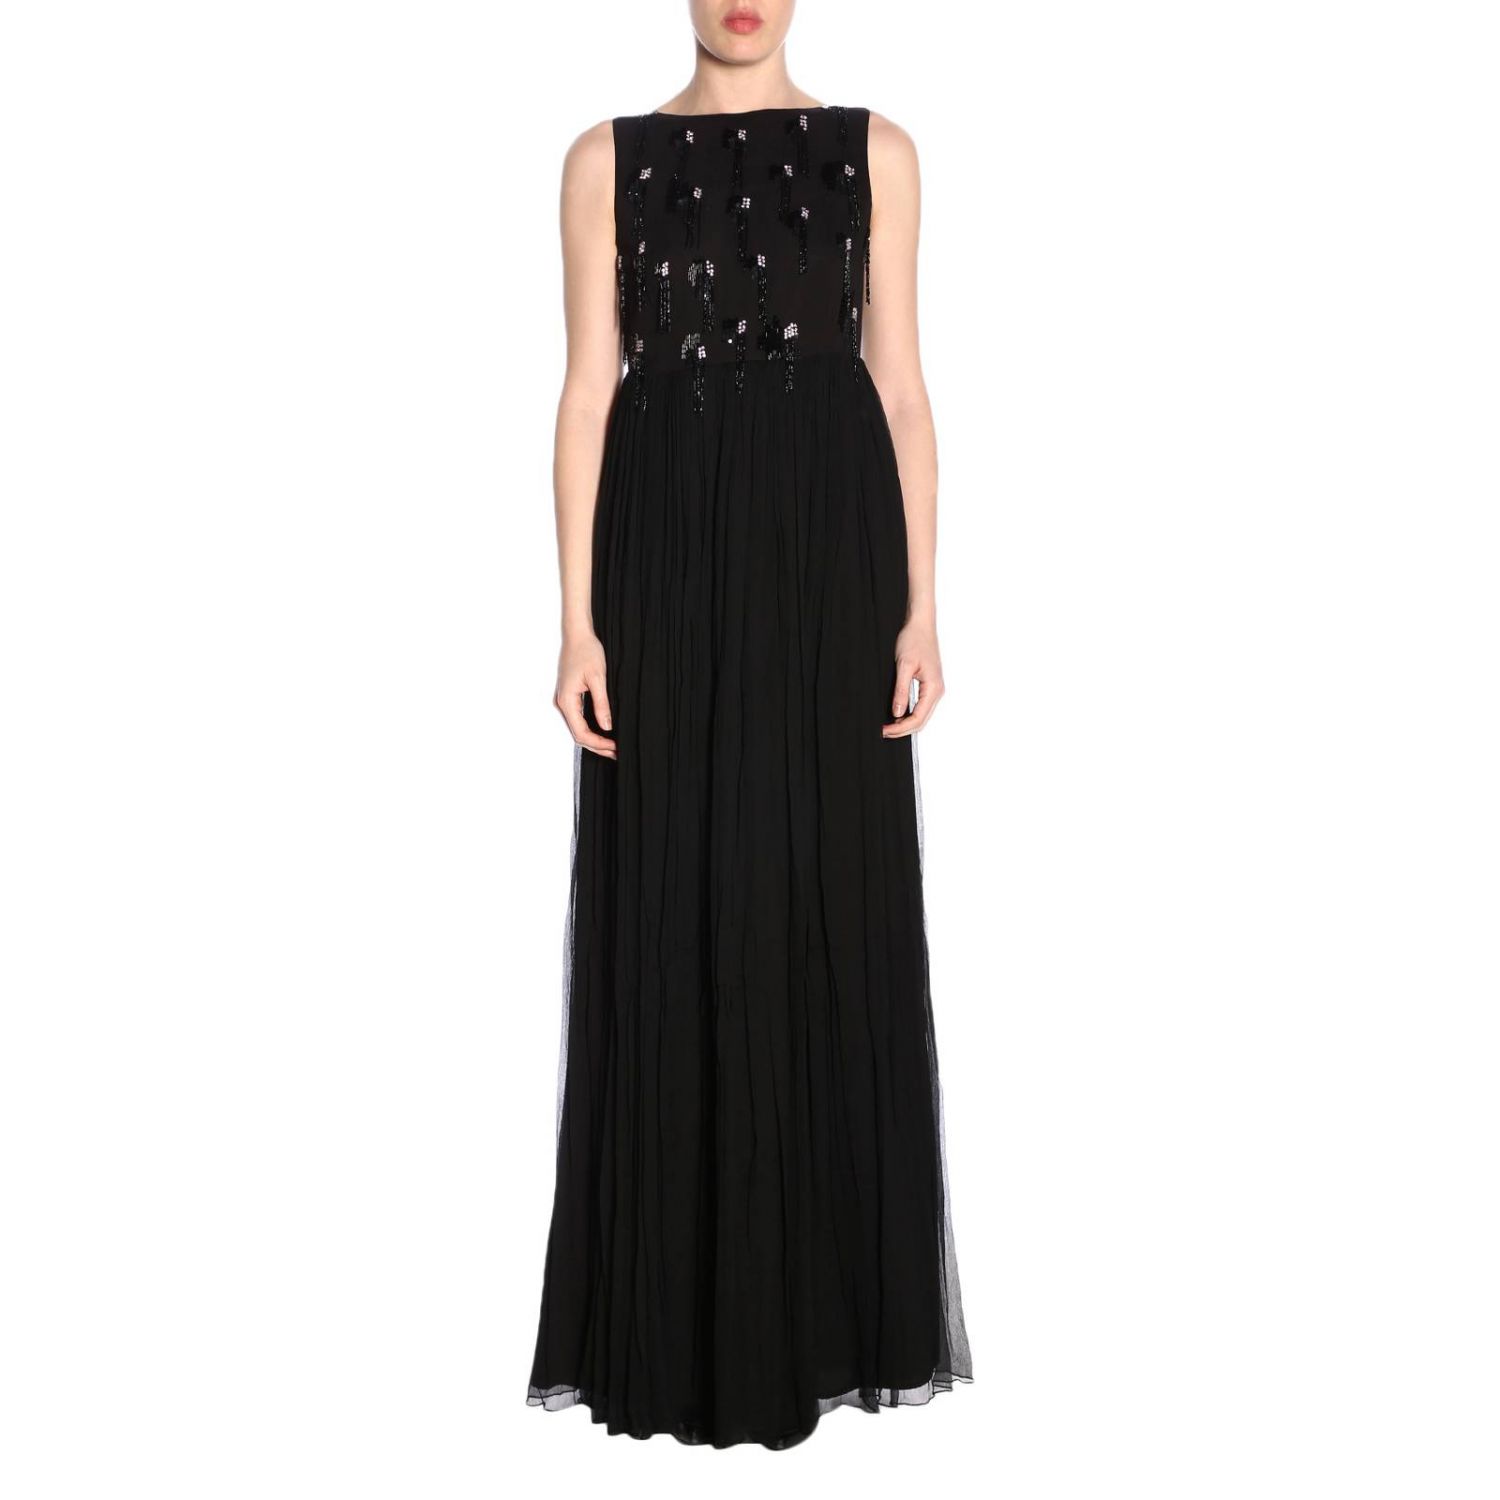 Just Cavalli Outlet: dress for woman - Black | Just Cavalli dress ...